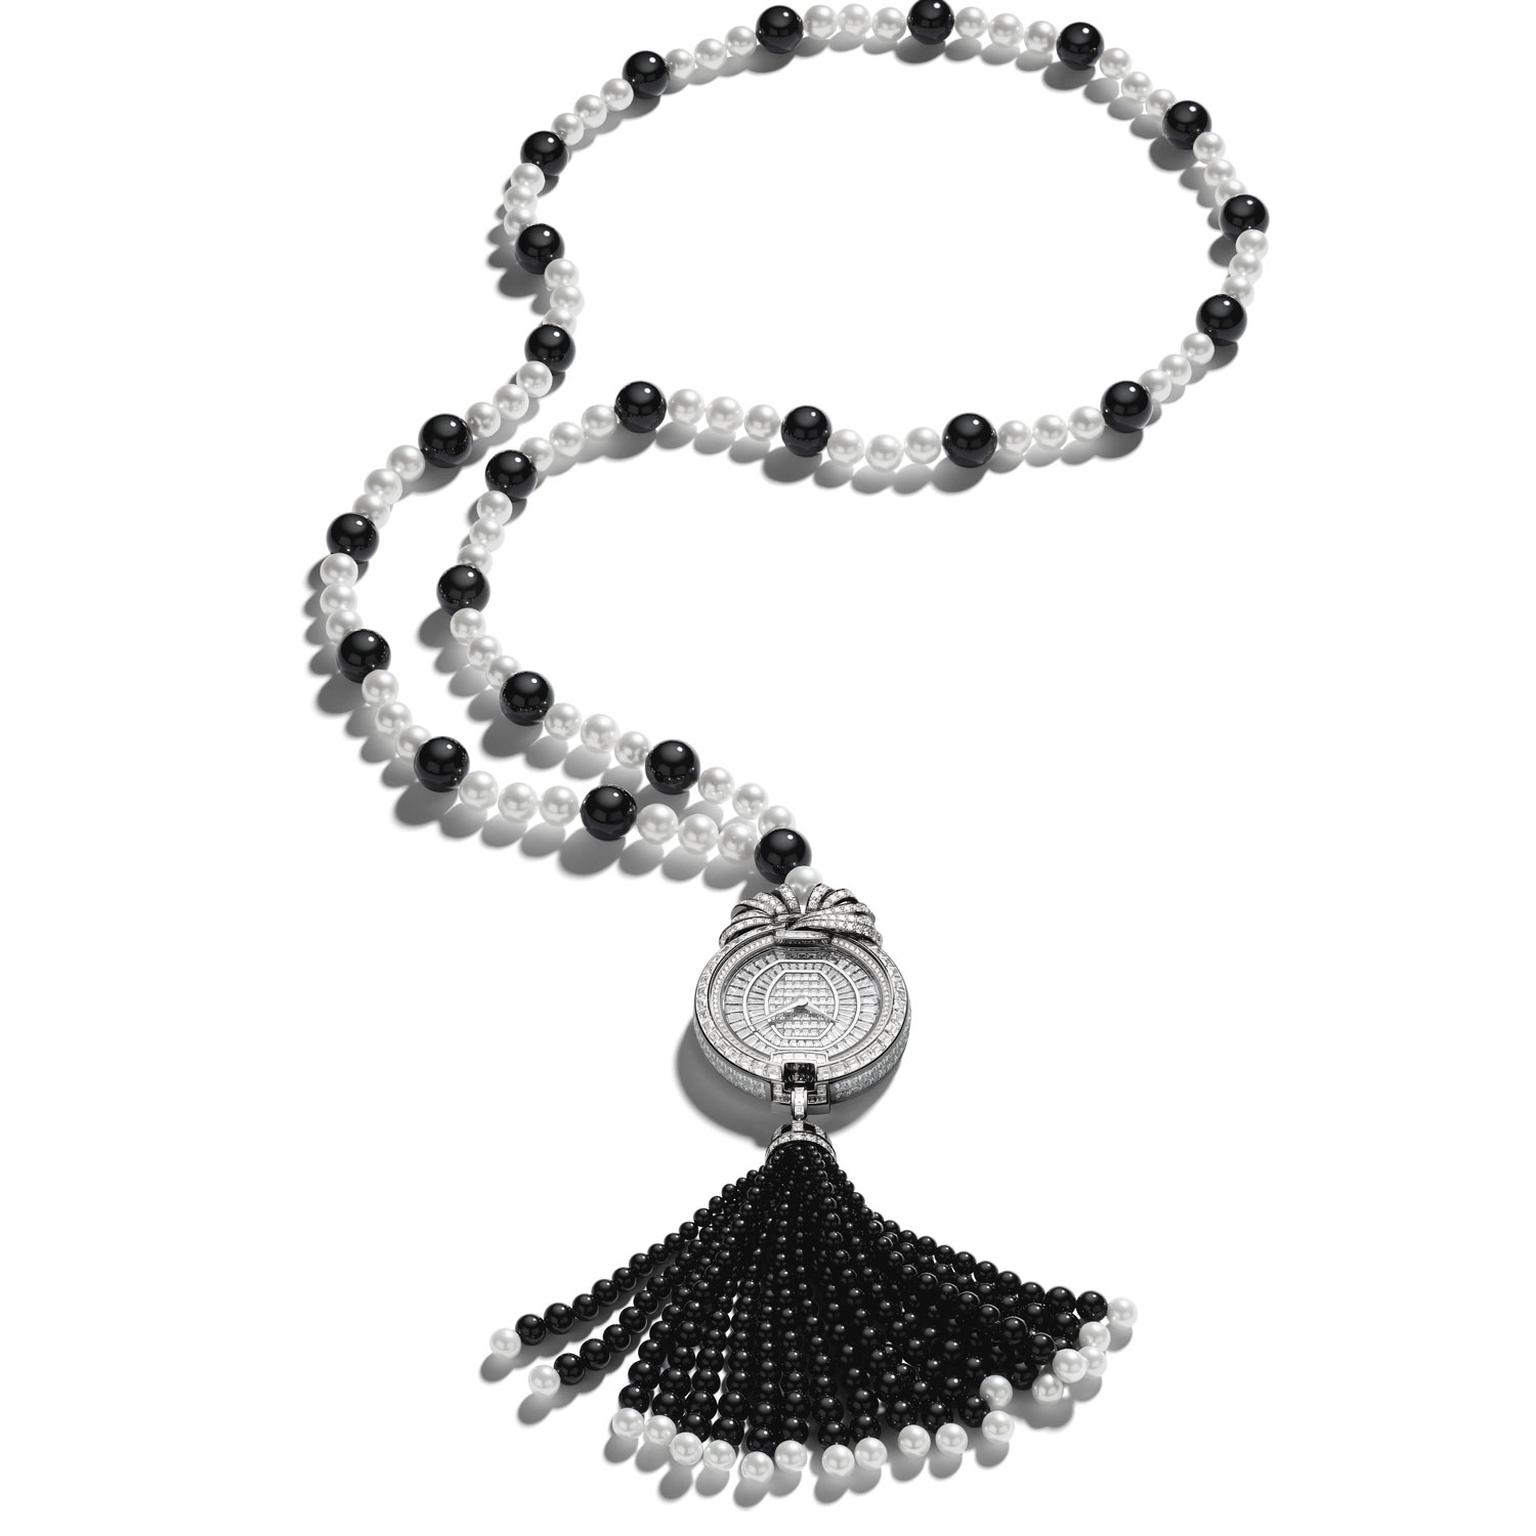 Roger Dubuis’ Velvet Ribbon pearl sautoir necklace watch